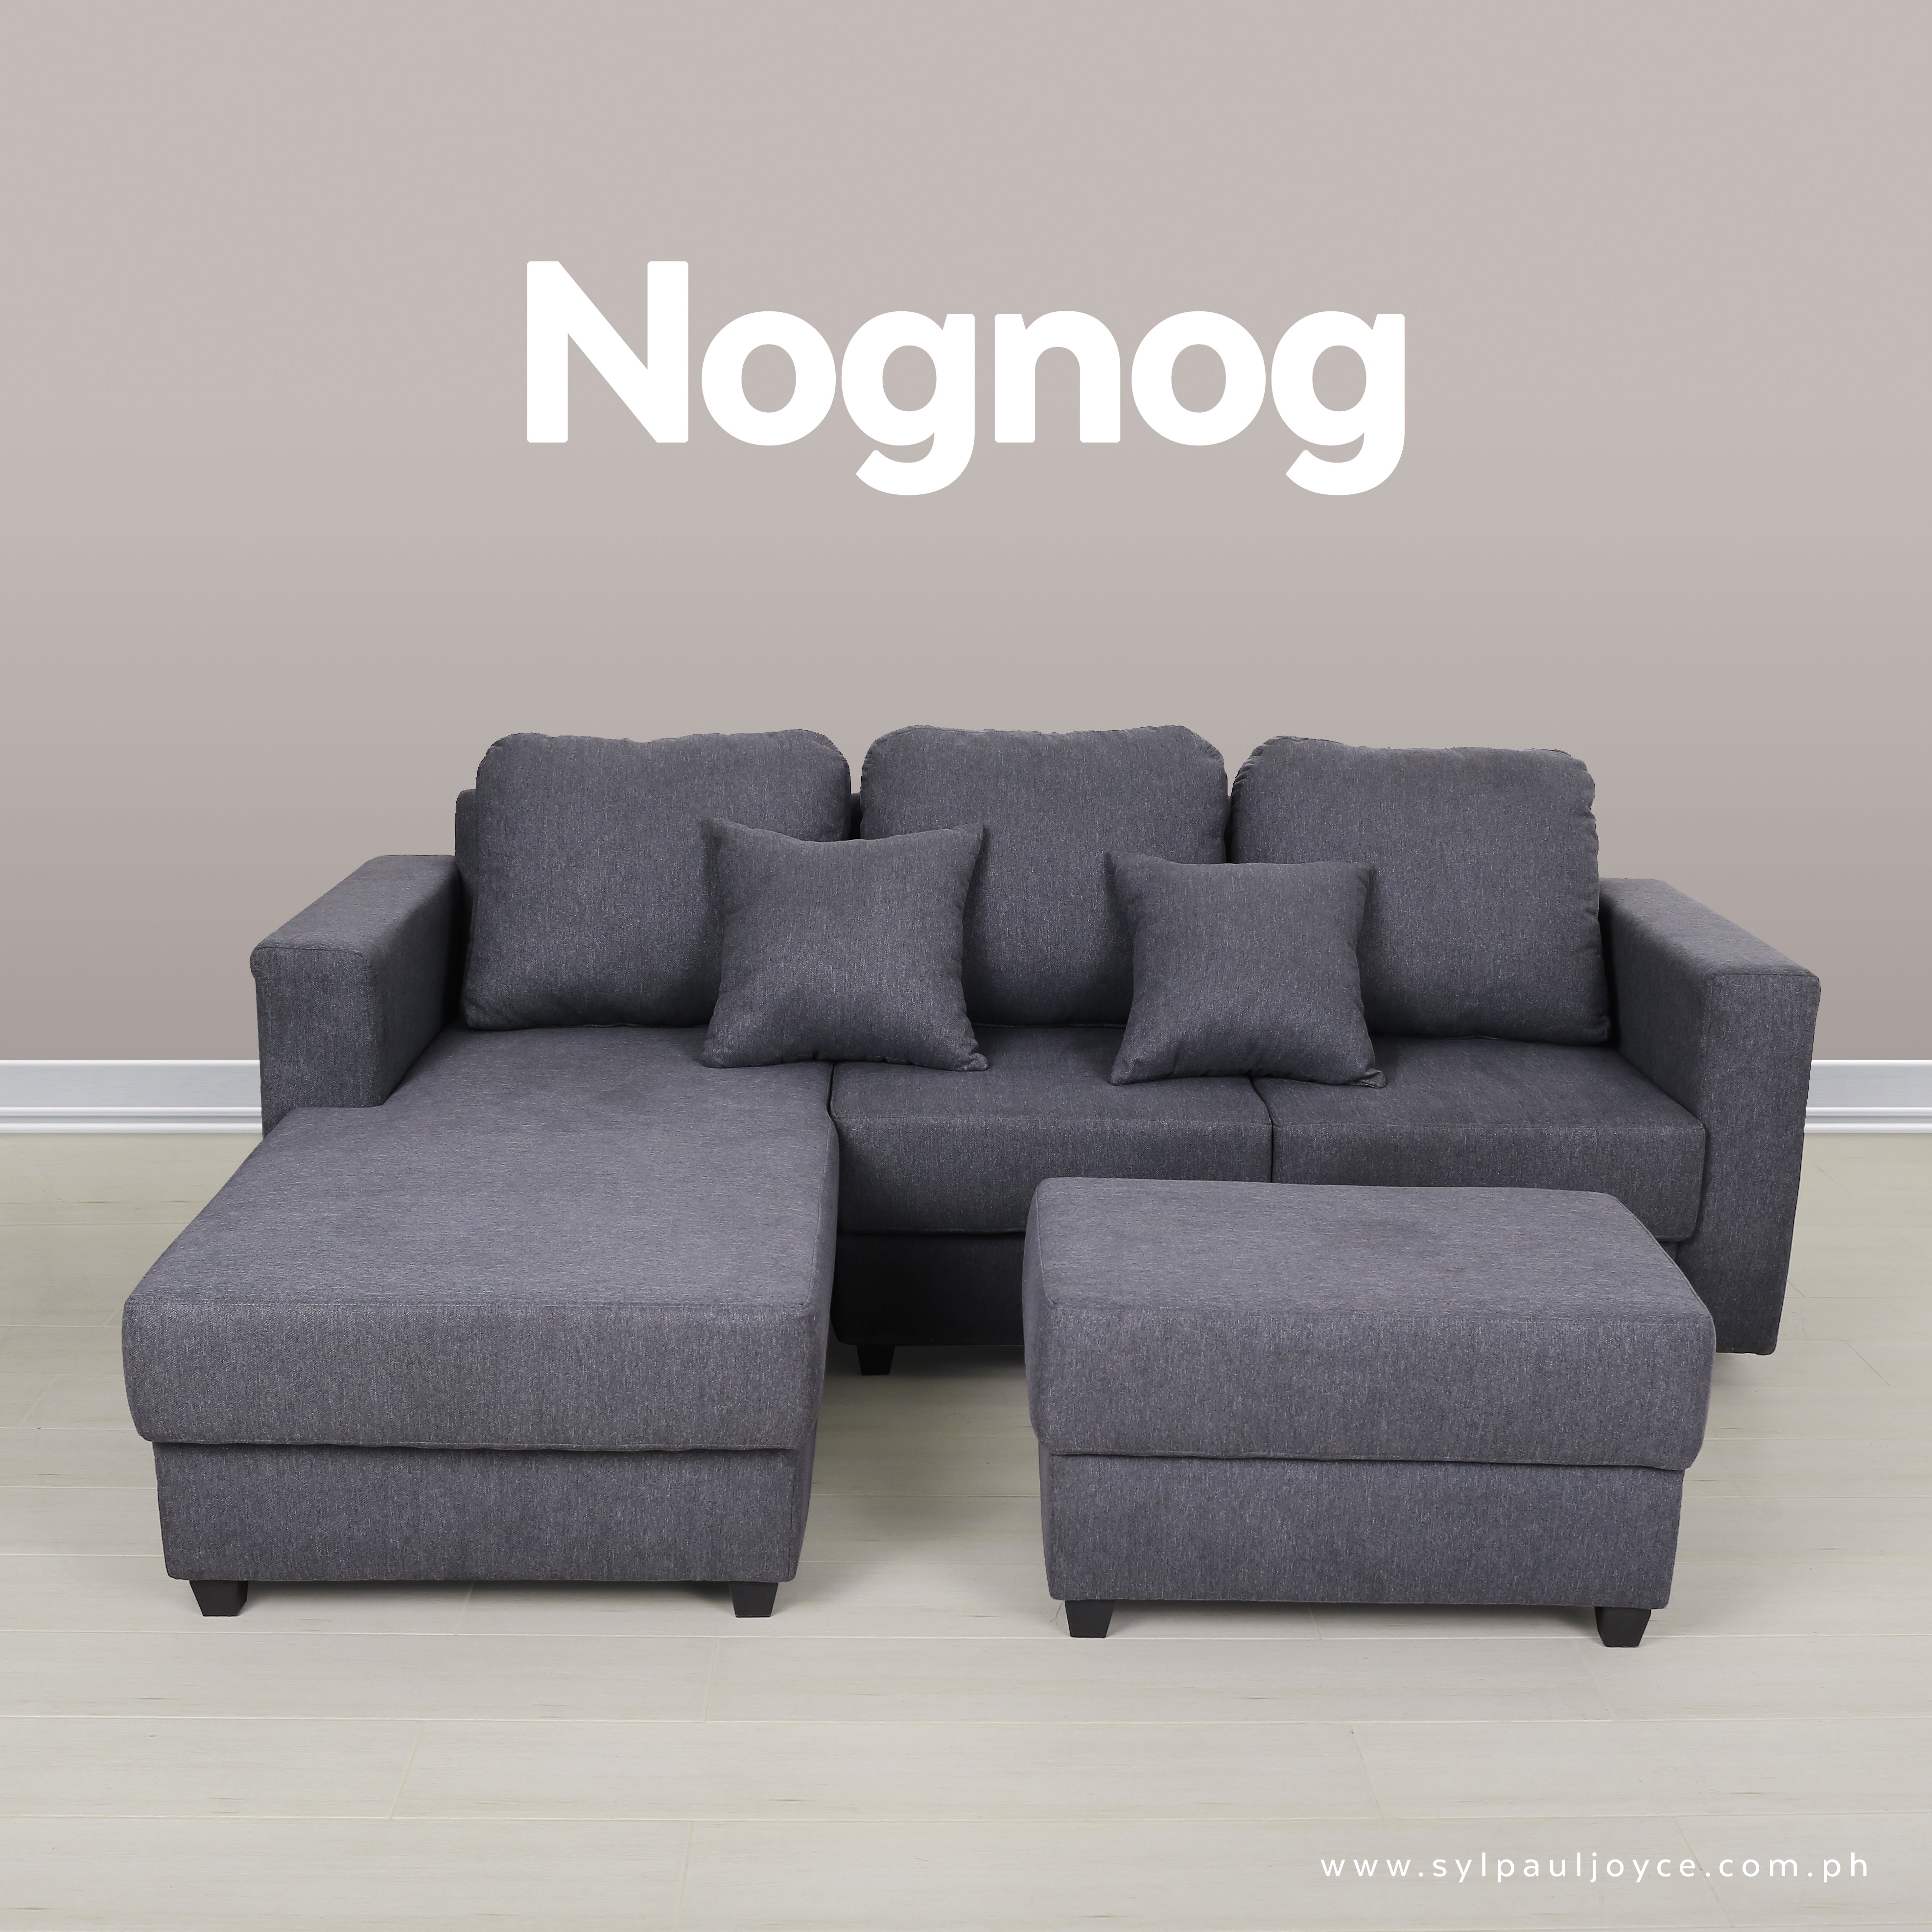 Nognog L-shape Sofa with Stool